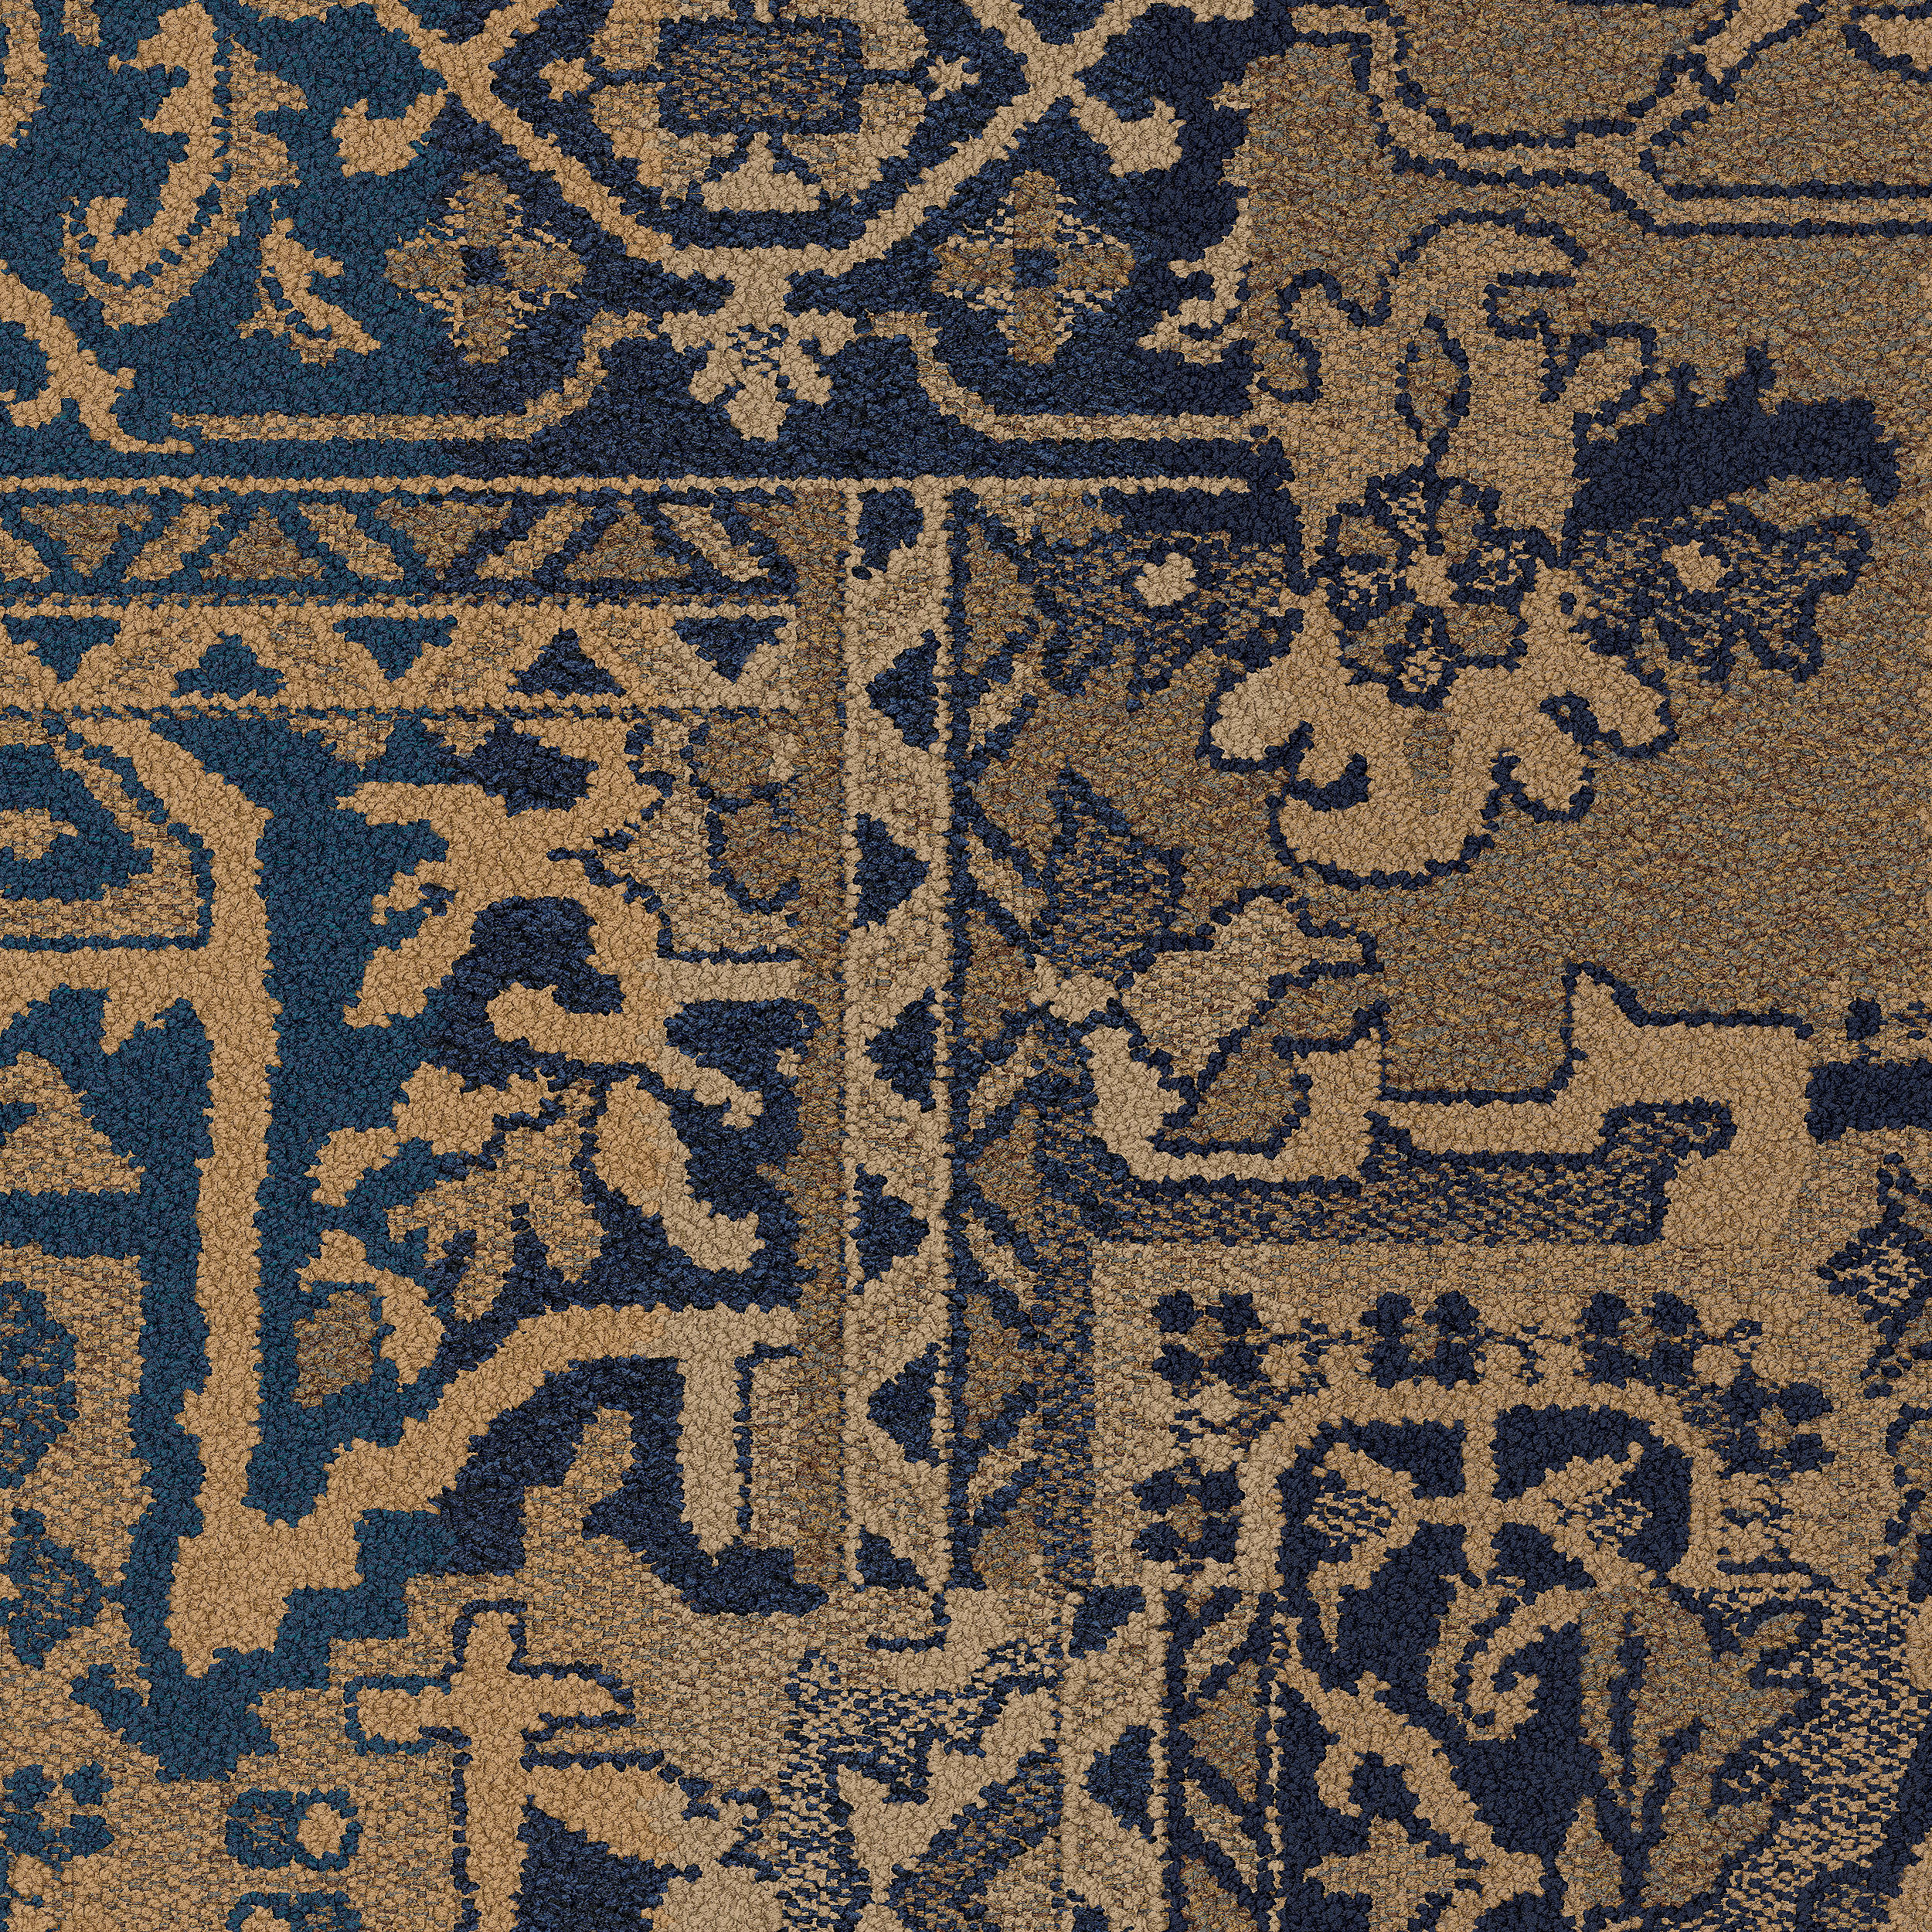 Antiquities carpet tile in Amber Bildnummer 6